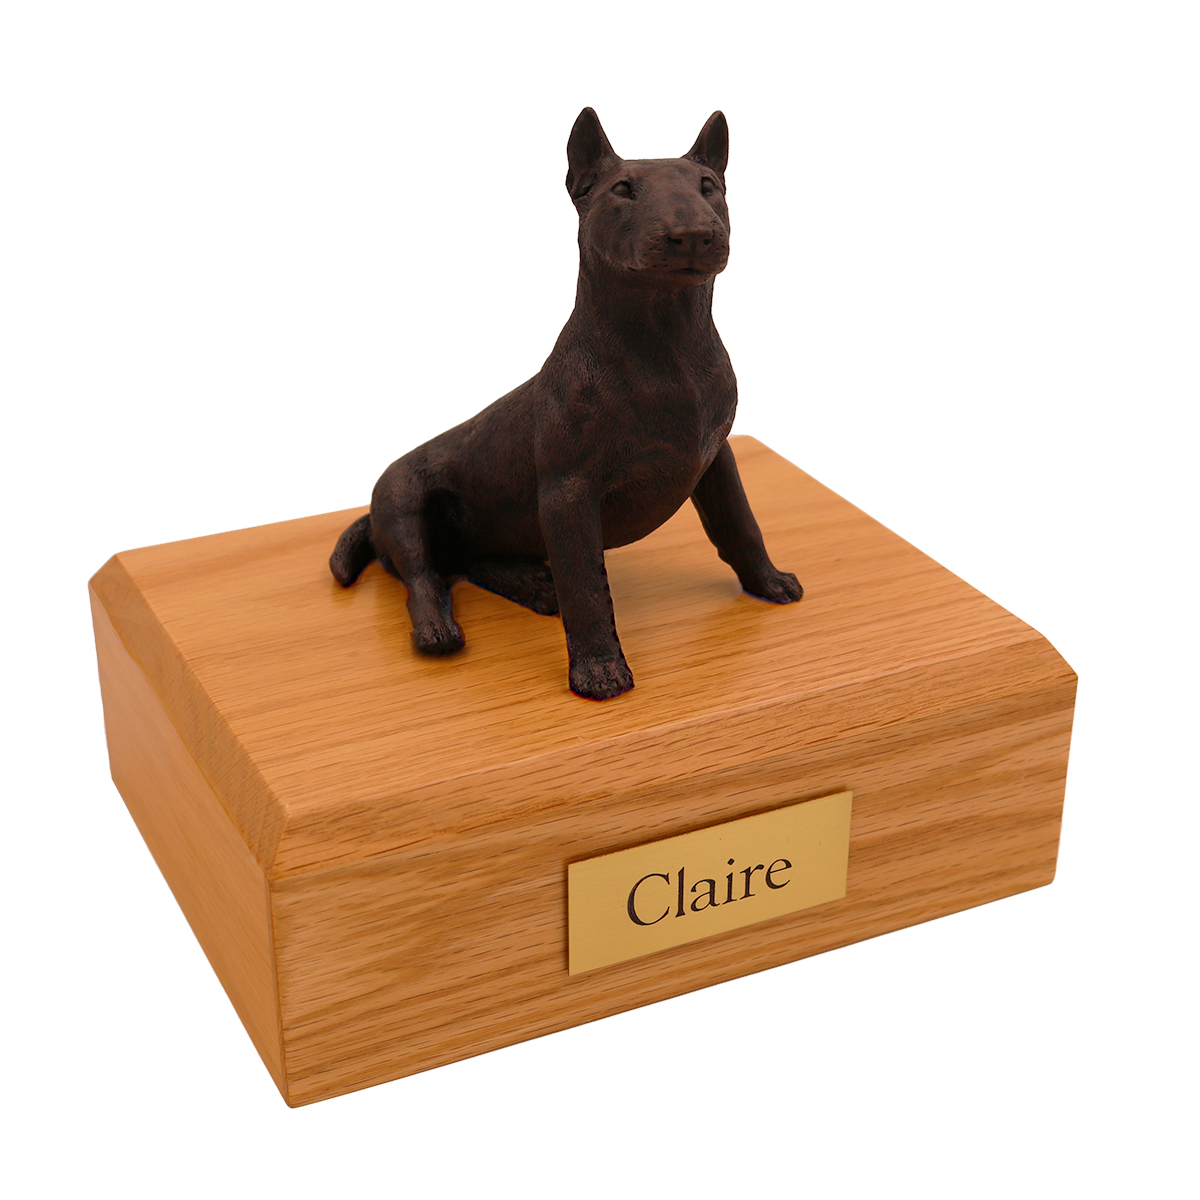 Dog, Bull Terrier, Bronze - Figurine Urn